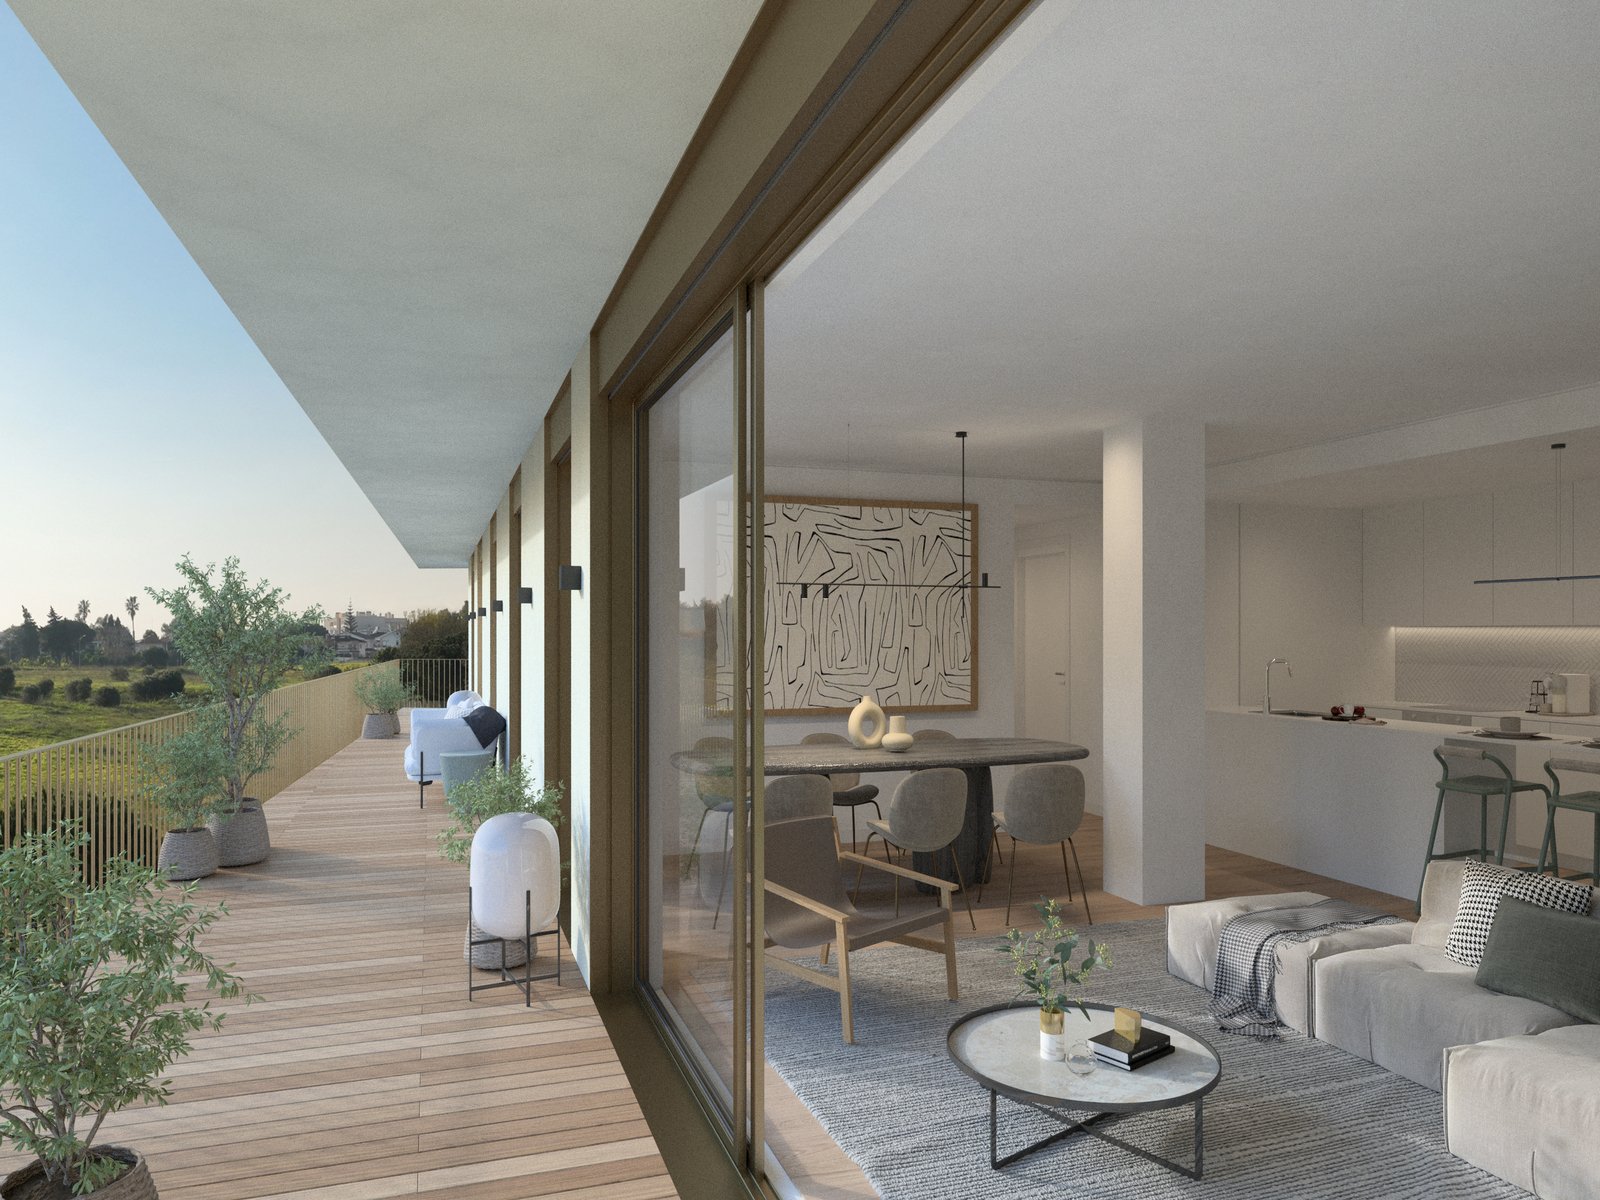 2 bedroom apartment with balcony in new development in Miraflores 209061140